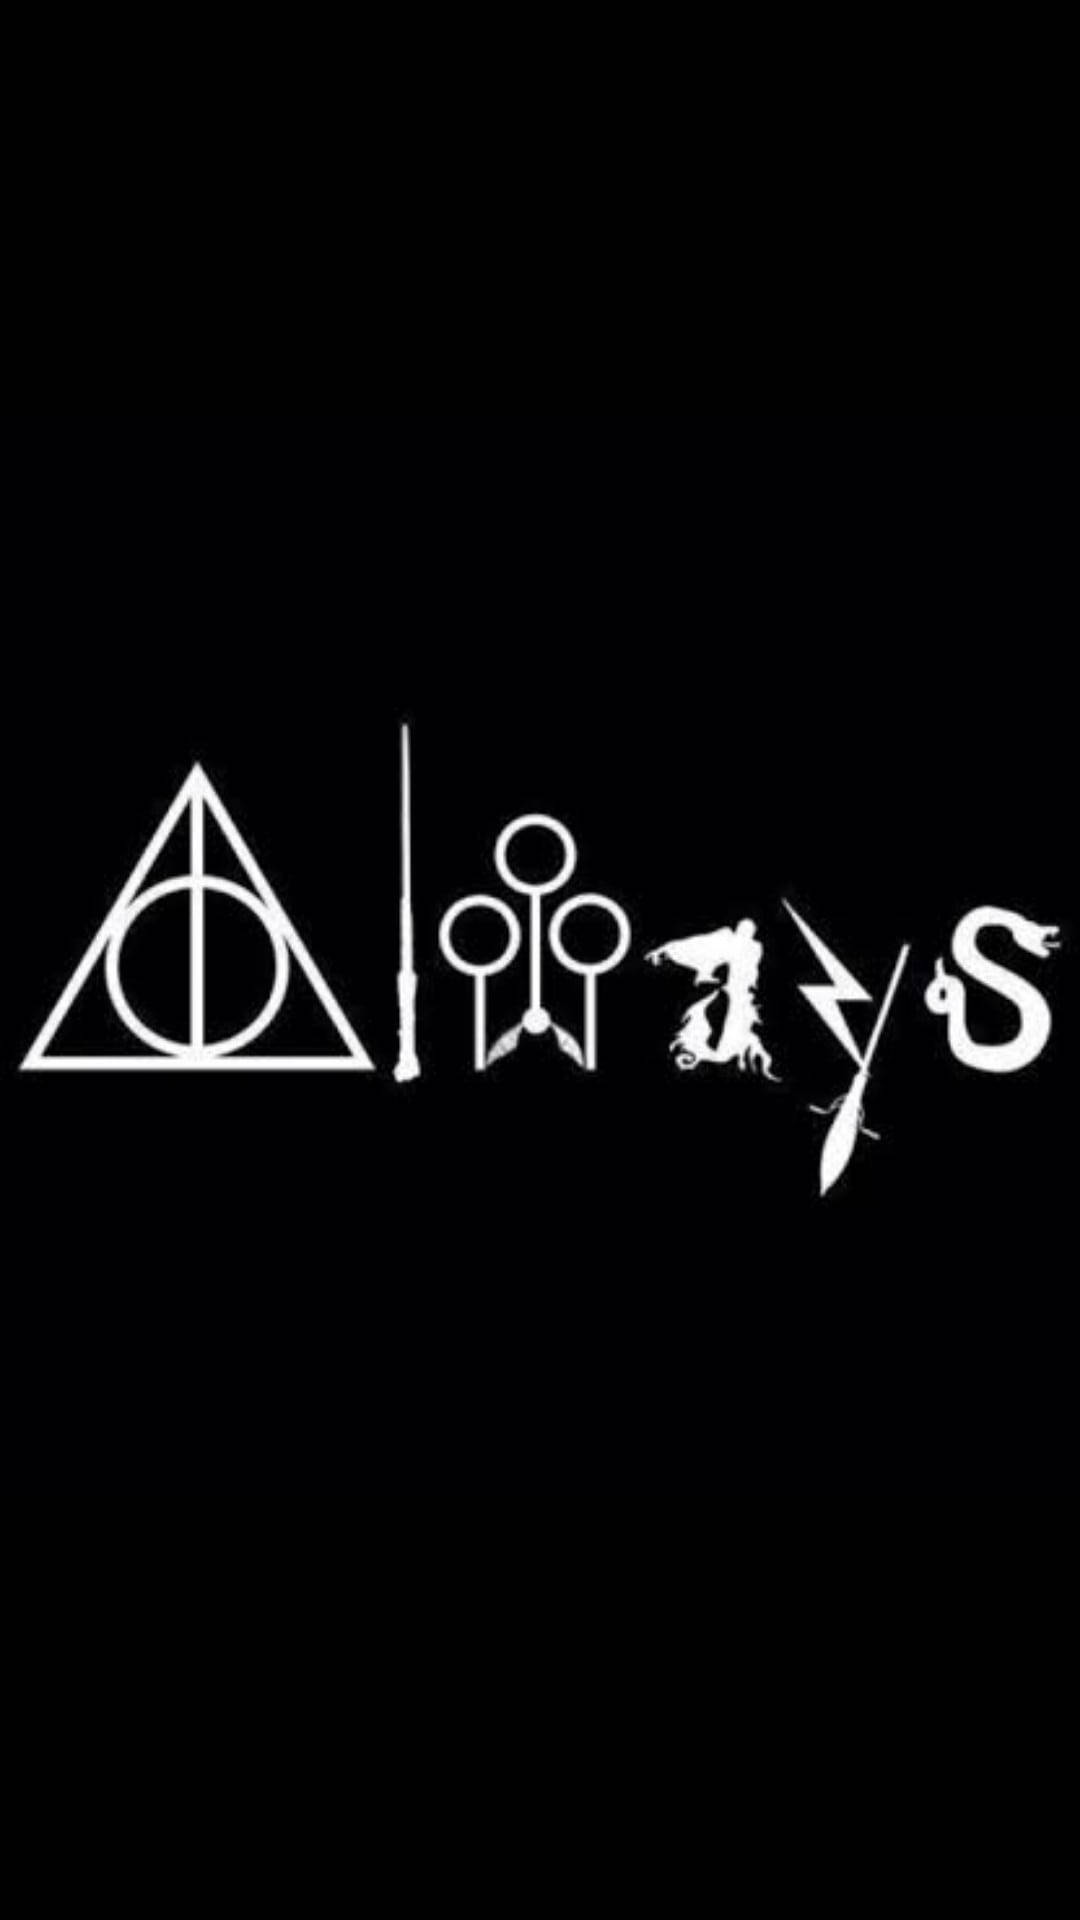 Severus Snape Symbols Wallpaper